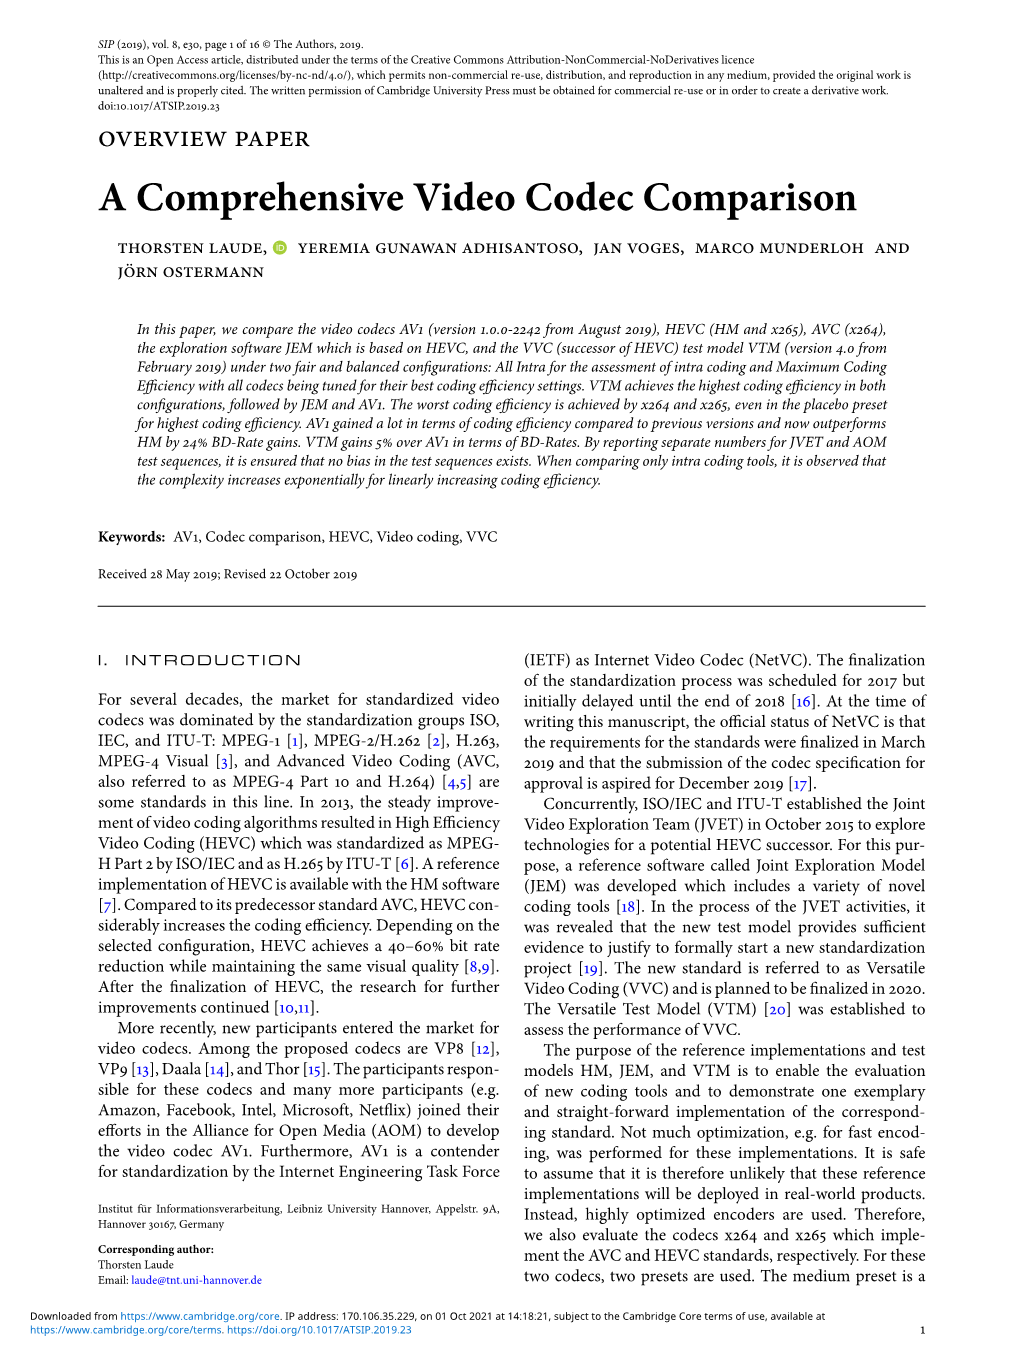 A Comprehensive Video Codec Comparison Thorsten Laude, Yeremia Gunawan Adhisantoso, Jan Voges, Marco Munderloh and Jörn Ostermann